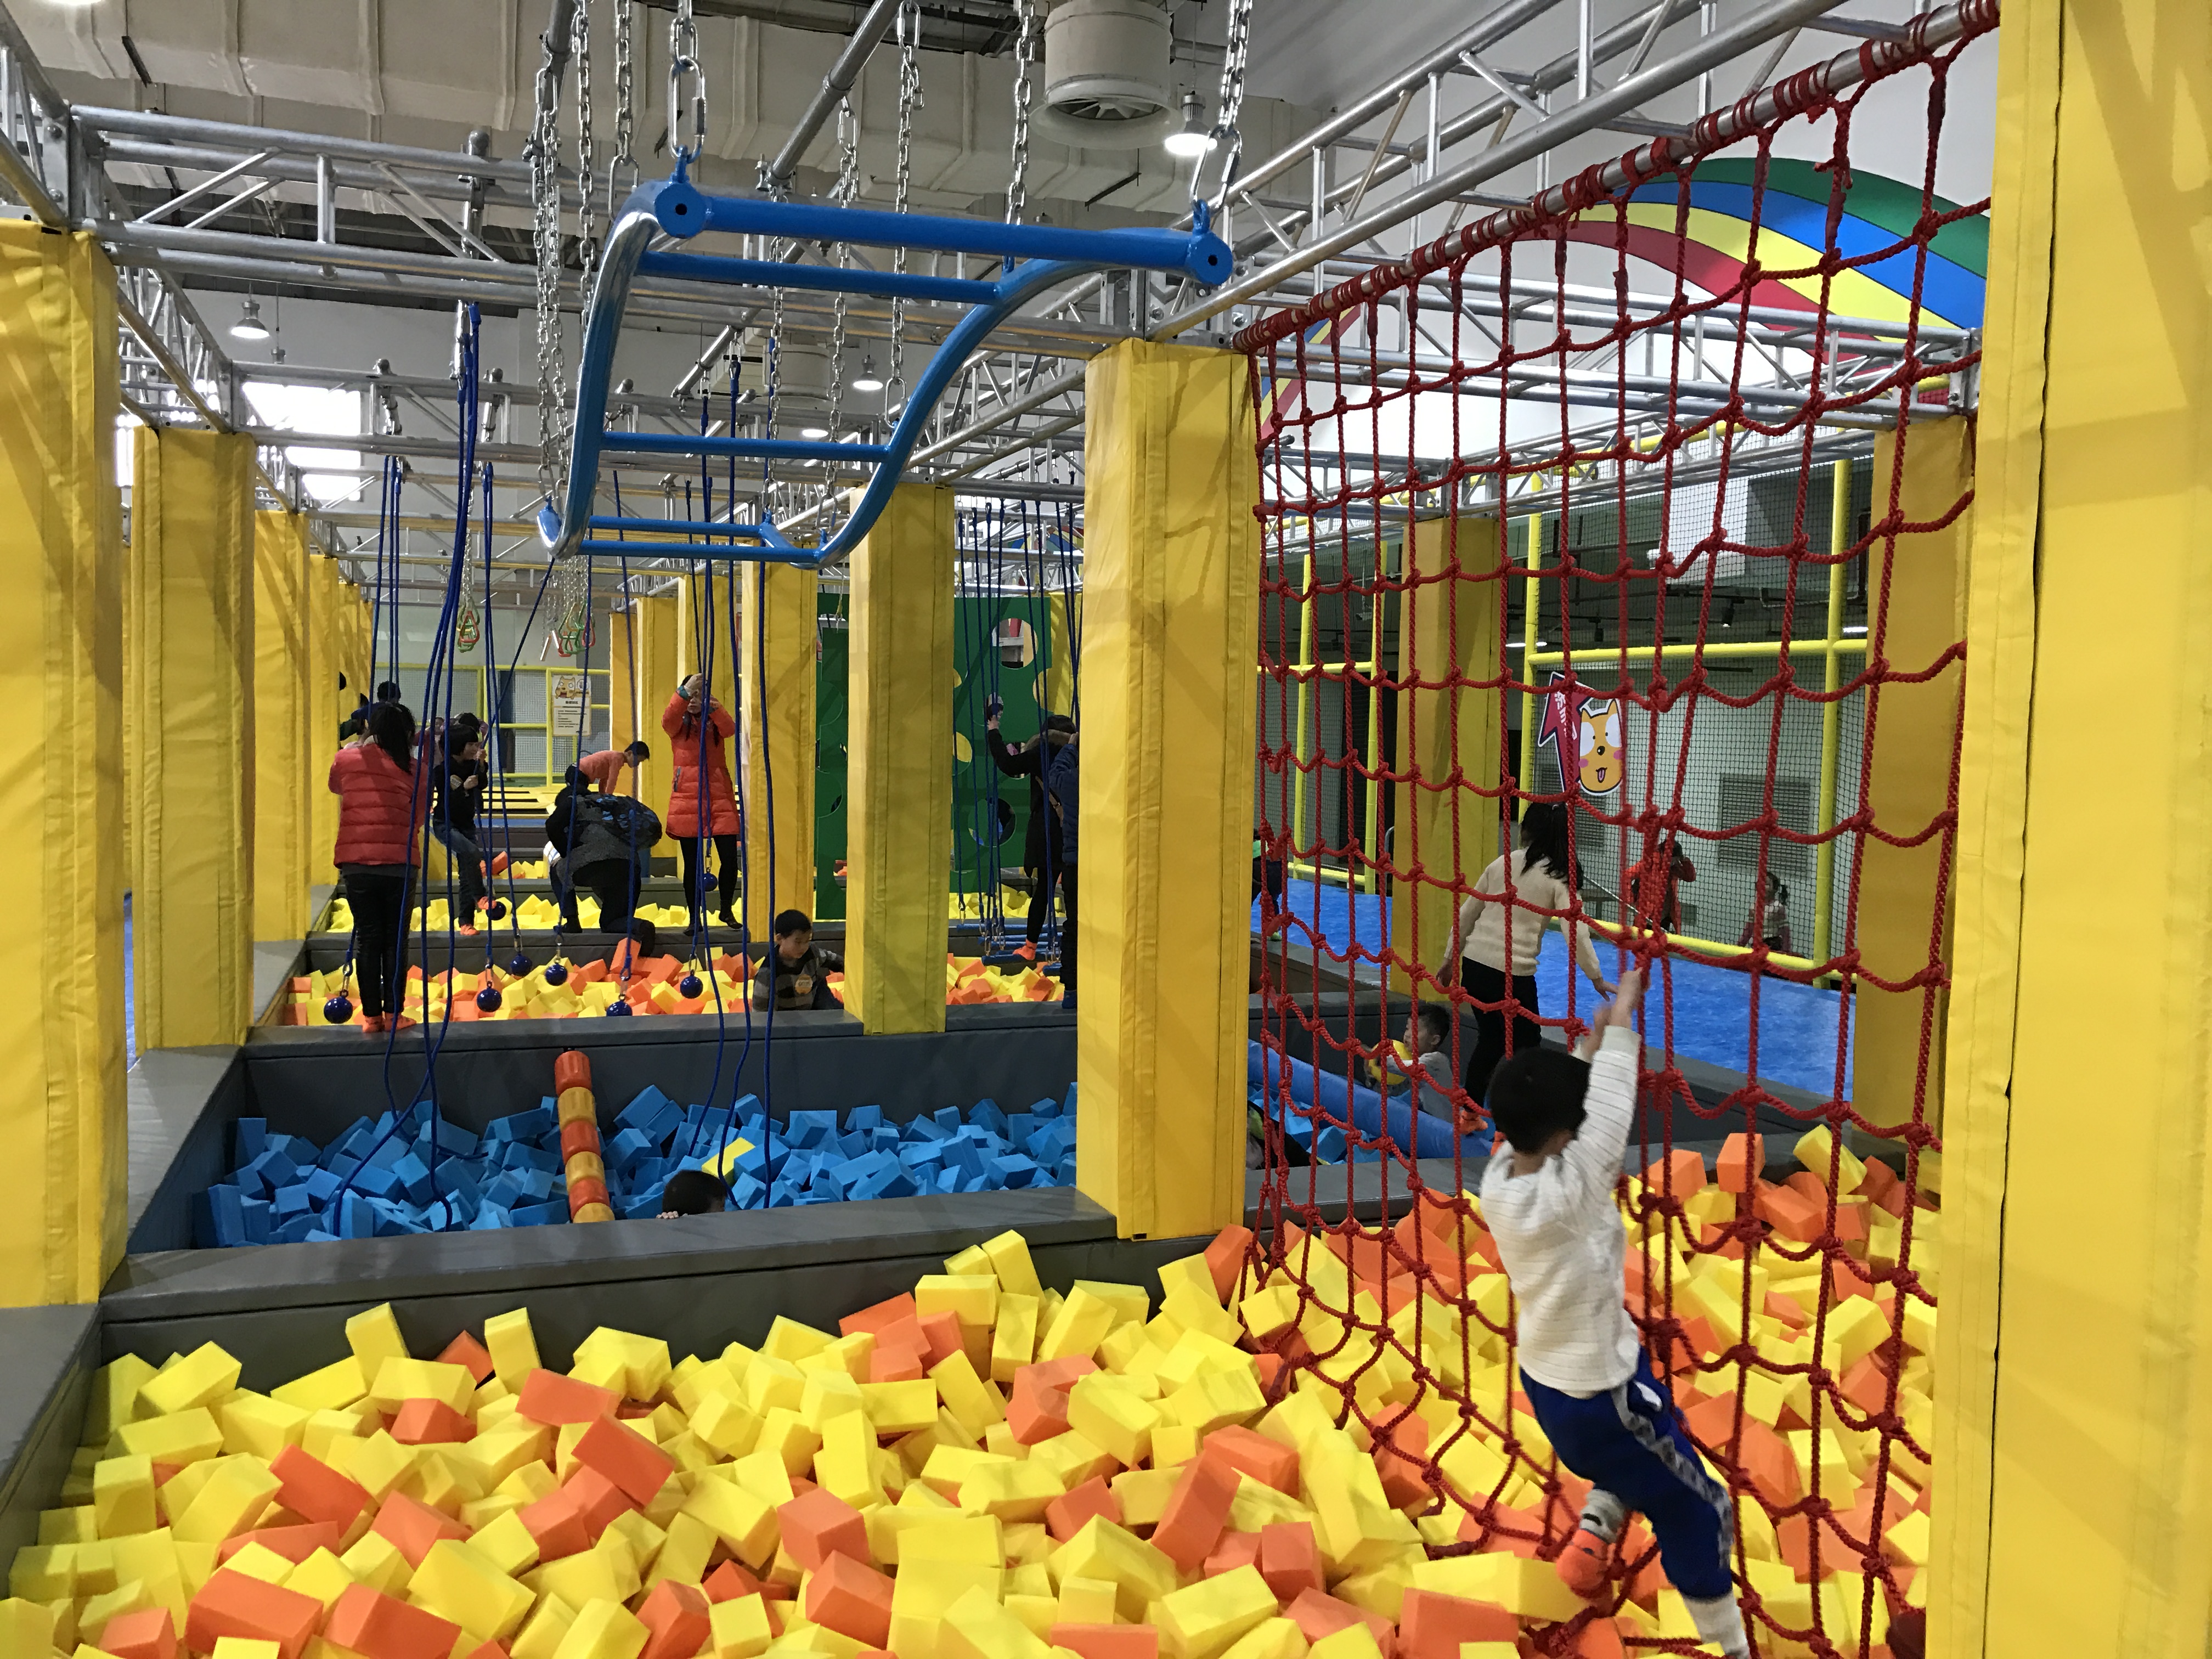 Why is indoor playground equipment popular?